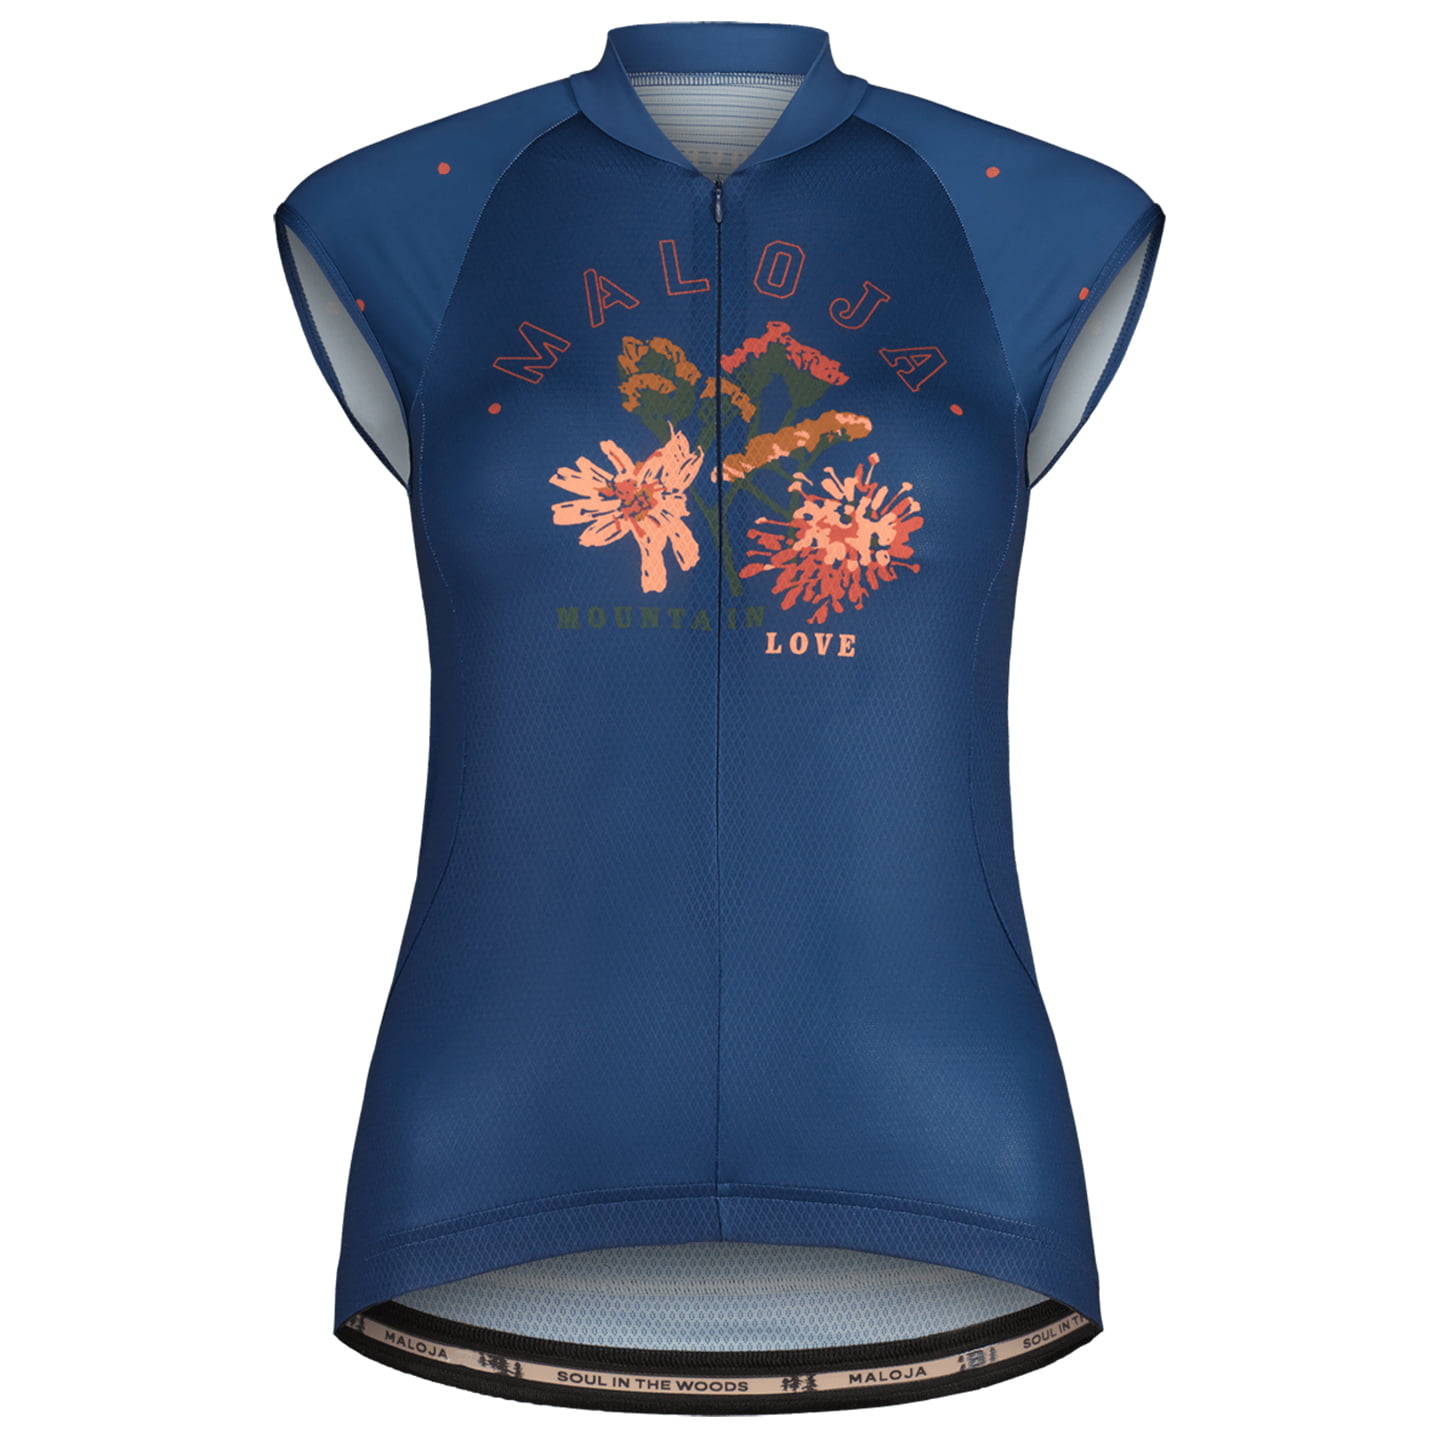 MALOJA VanilM. Women’s Jersey Women’s Sleeveless Jersey, size XL, Cycle jersey, Bike gear